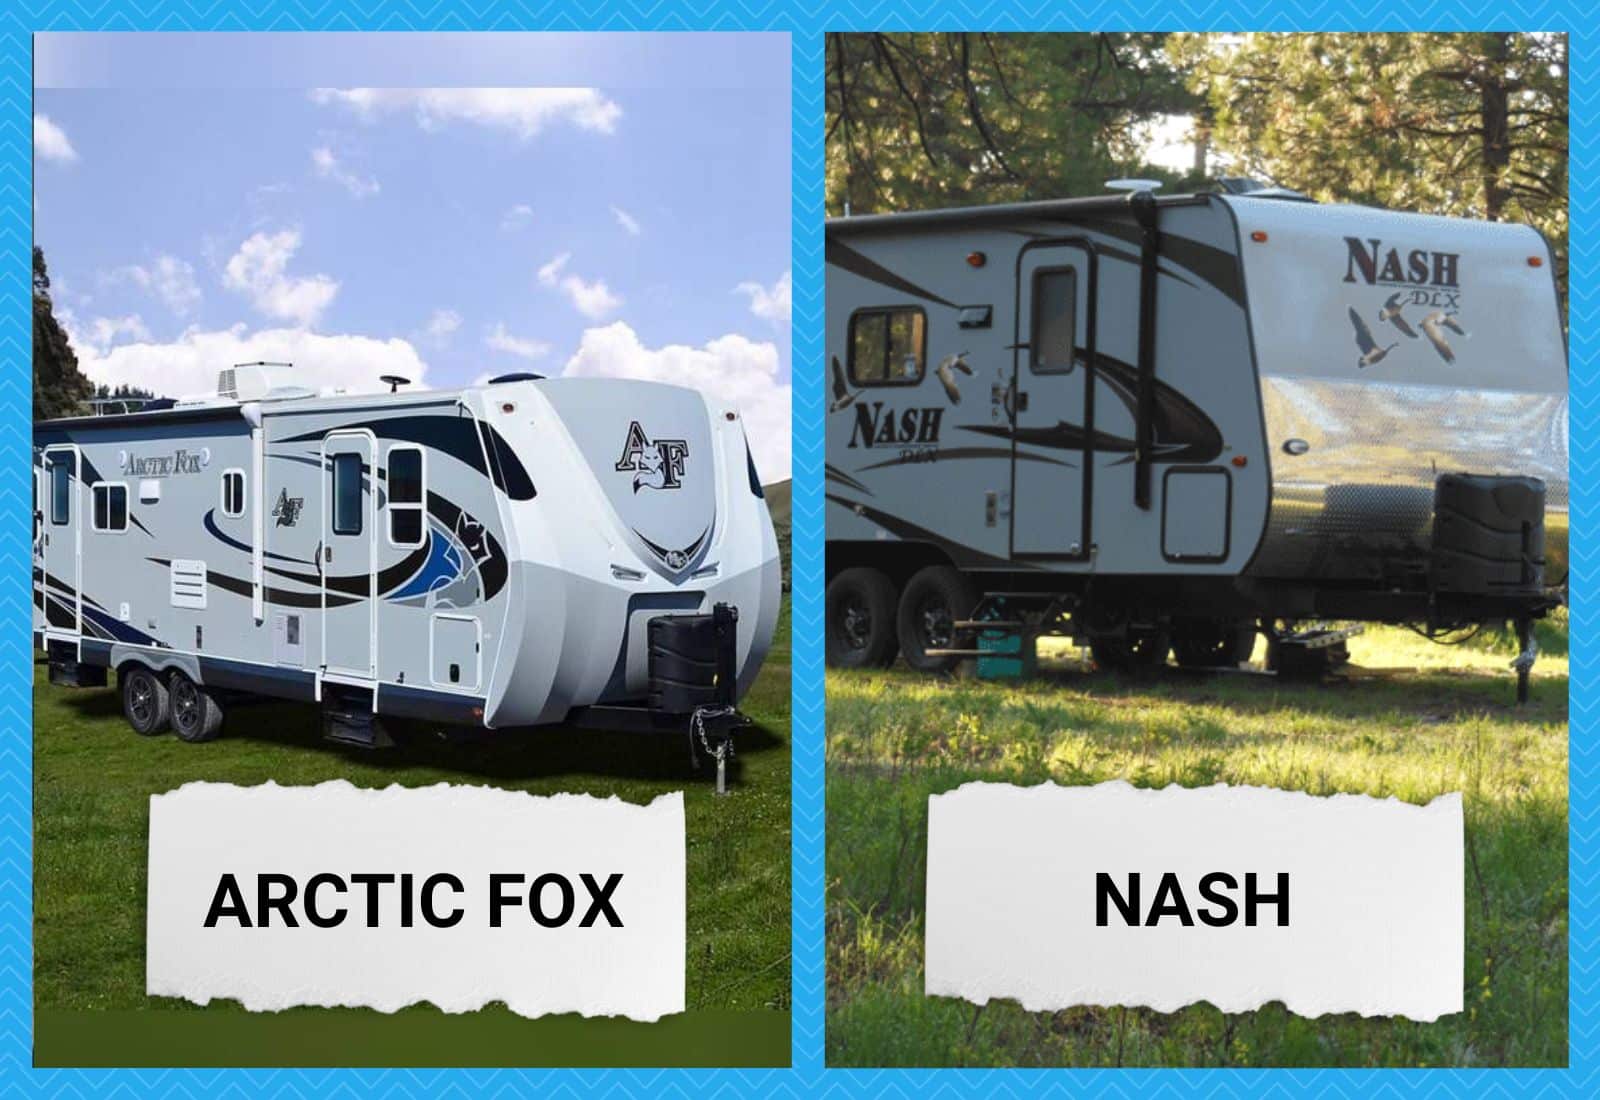 Nash vs Arctic Fox